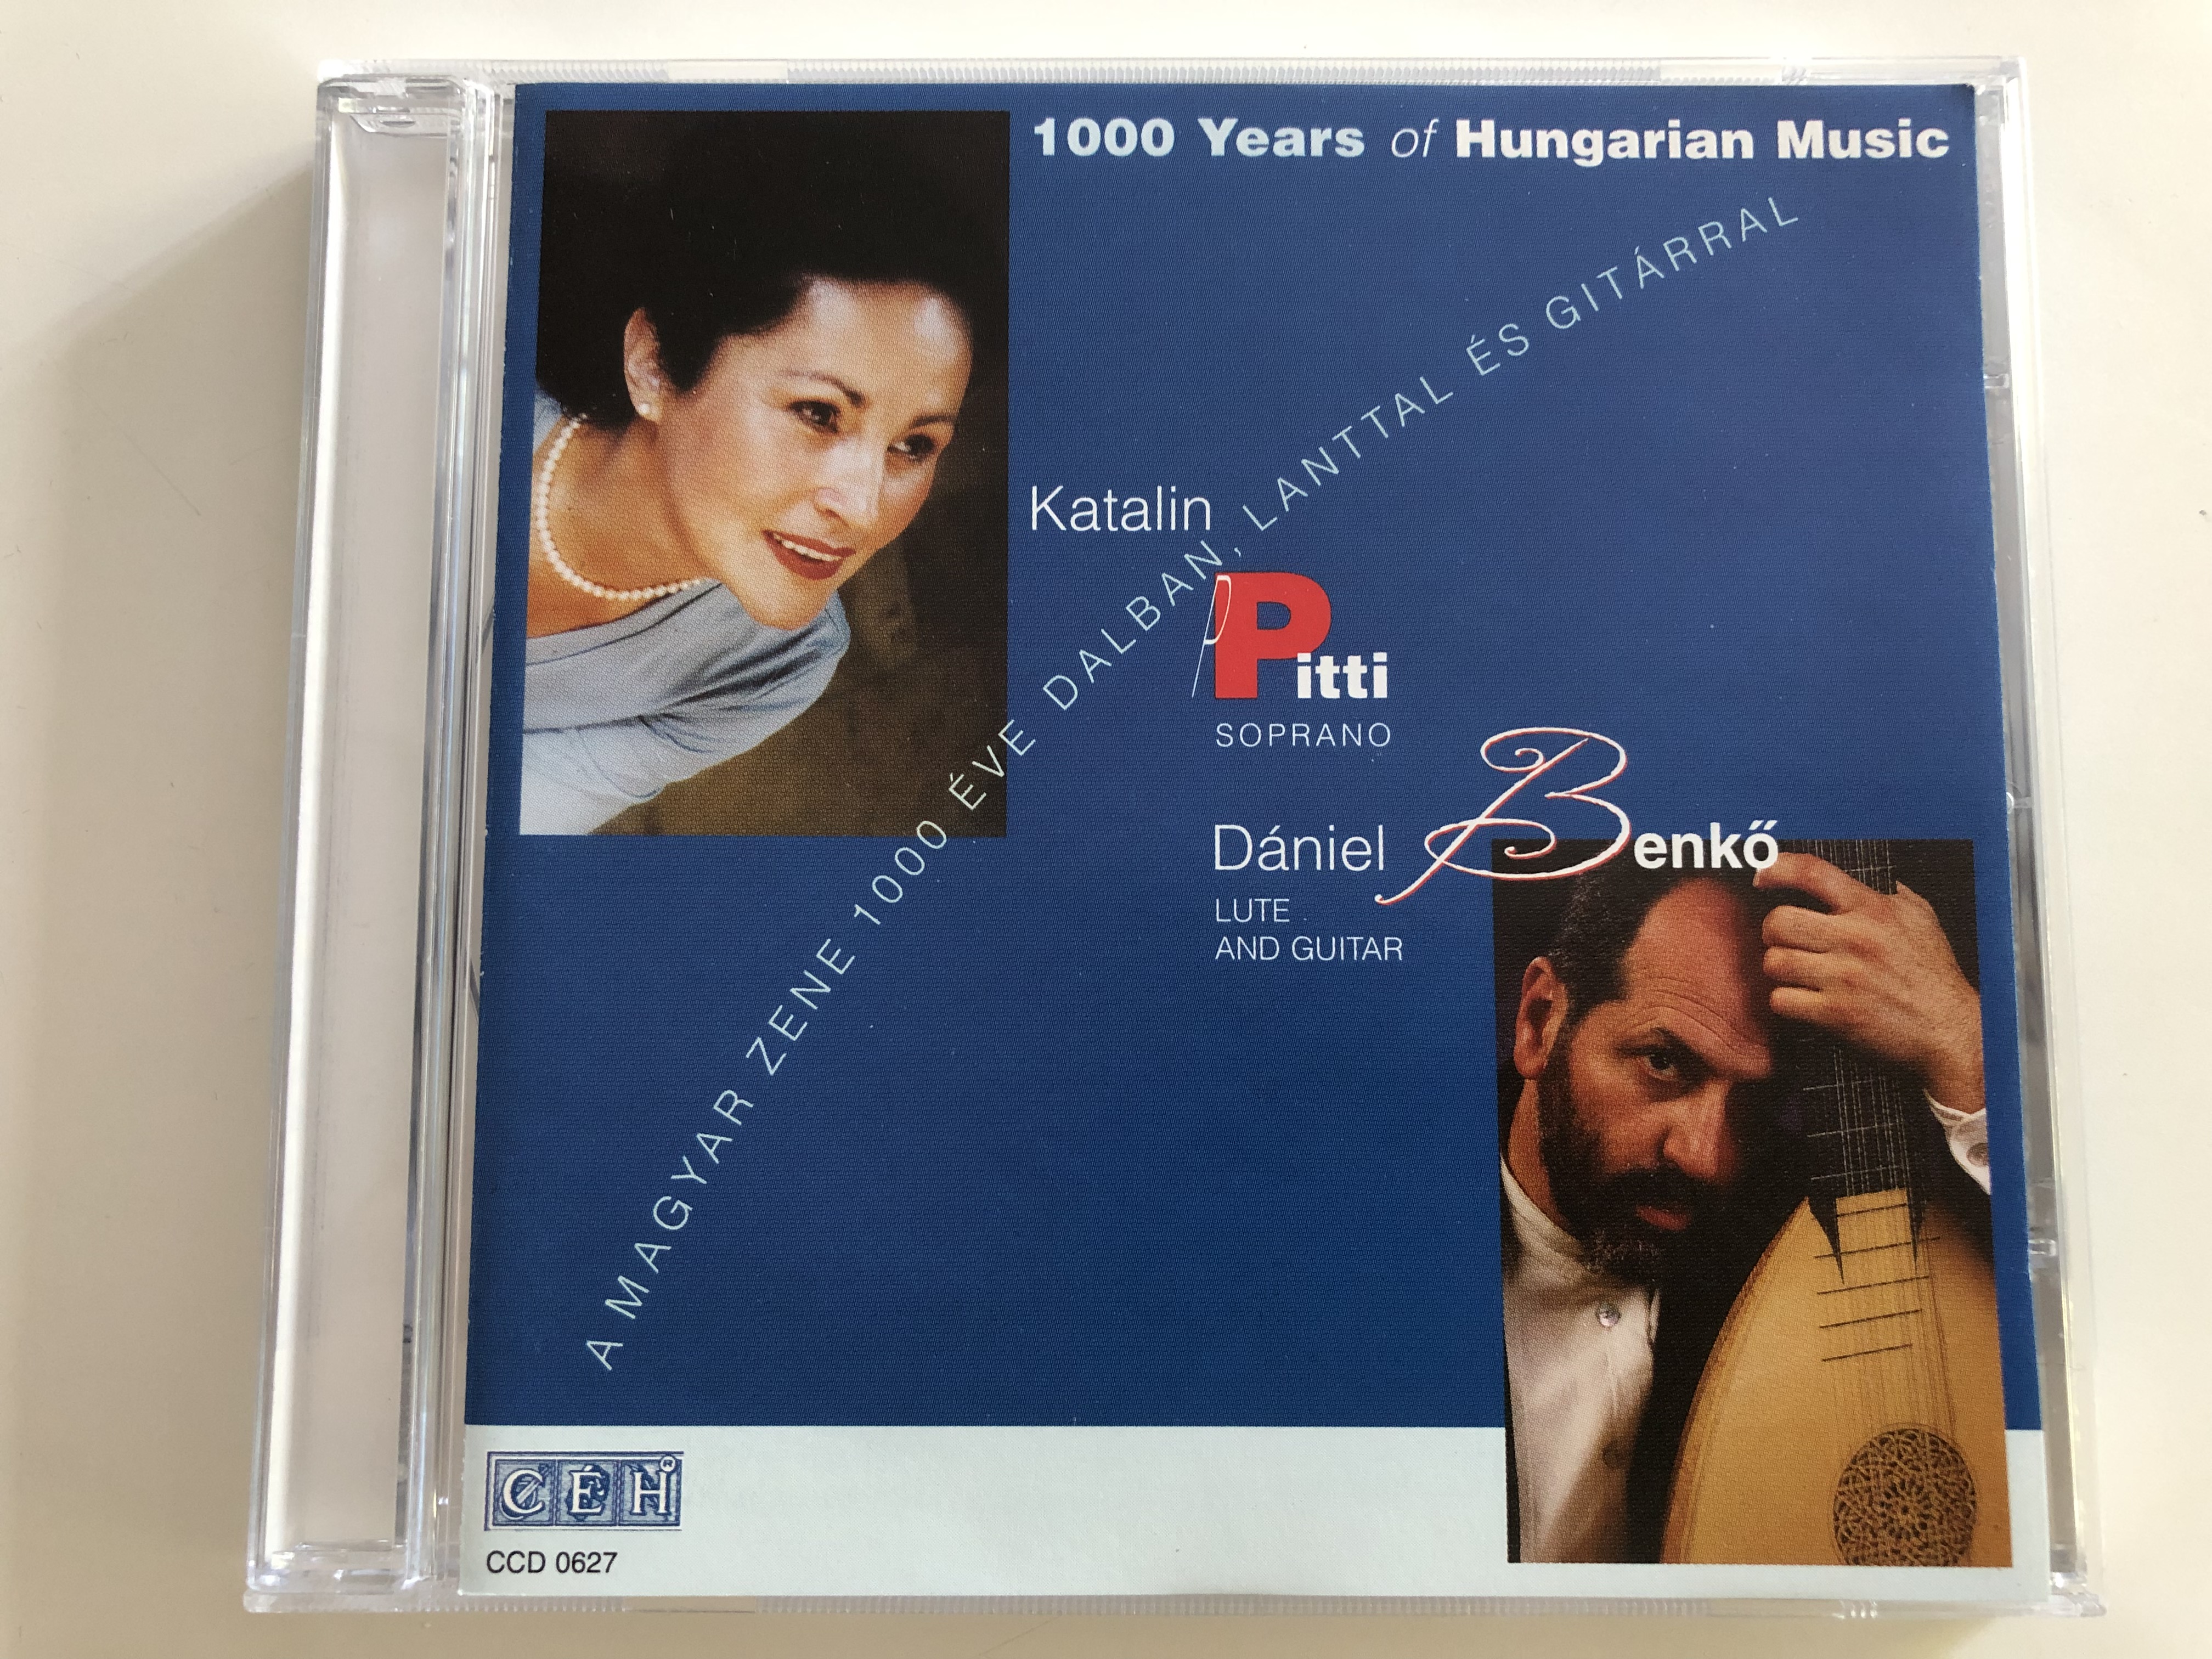 1000-years-of-hungarian-music-katalin-pitti-soprano-d-niel-benk-lute-guitar-a-magyar-zene-1000-ve-dalban-lanttal-s-git-rral-c-h-ccd-0627-audio-cd-2000-1-.jpg